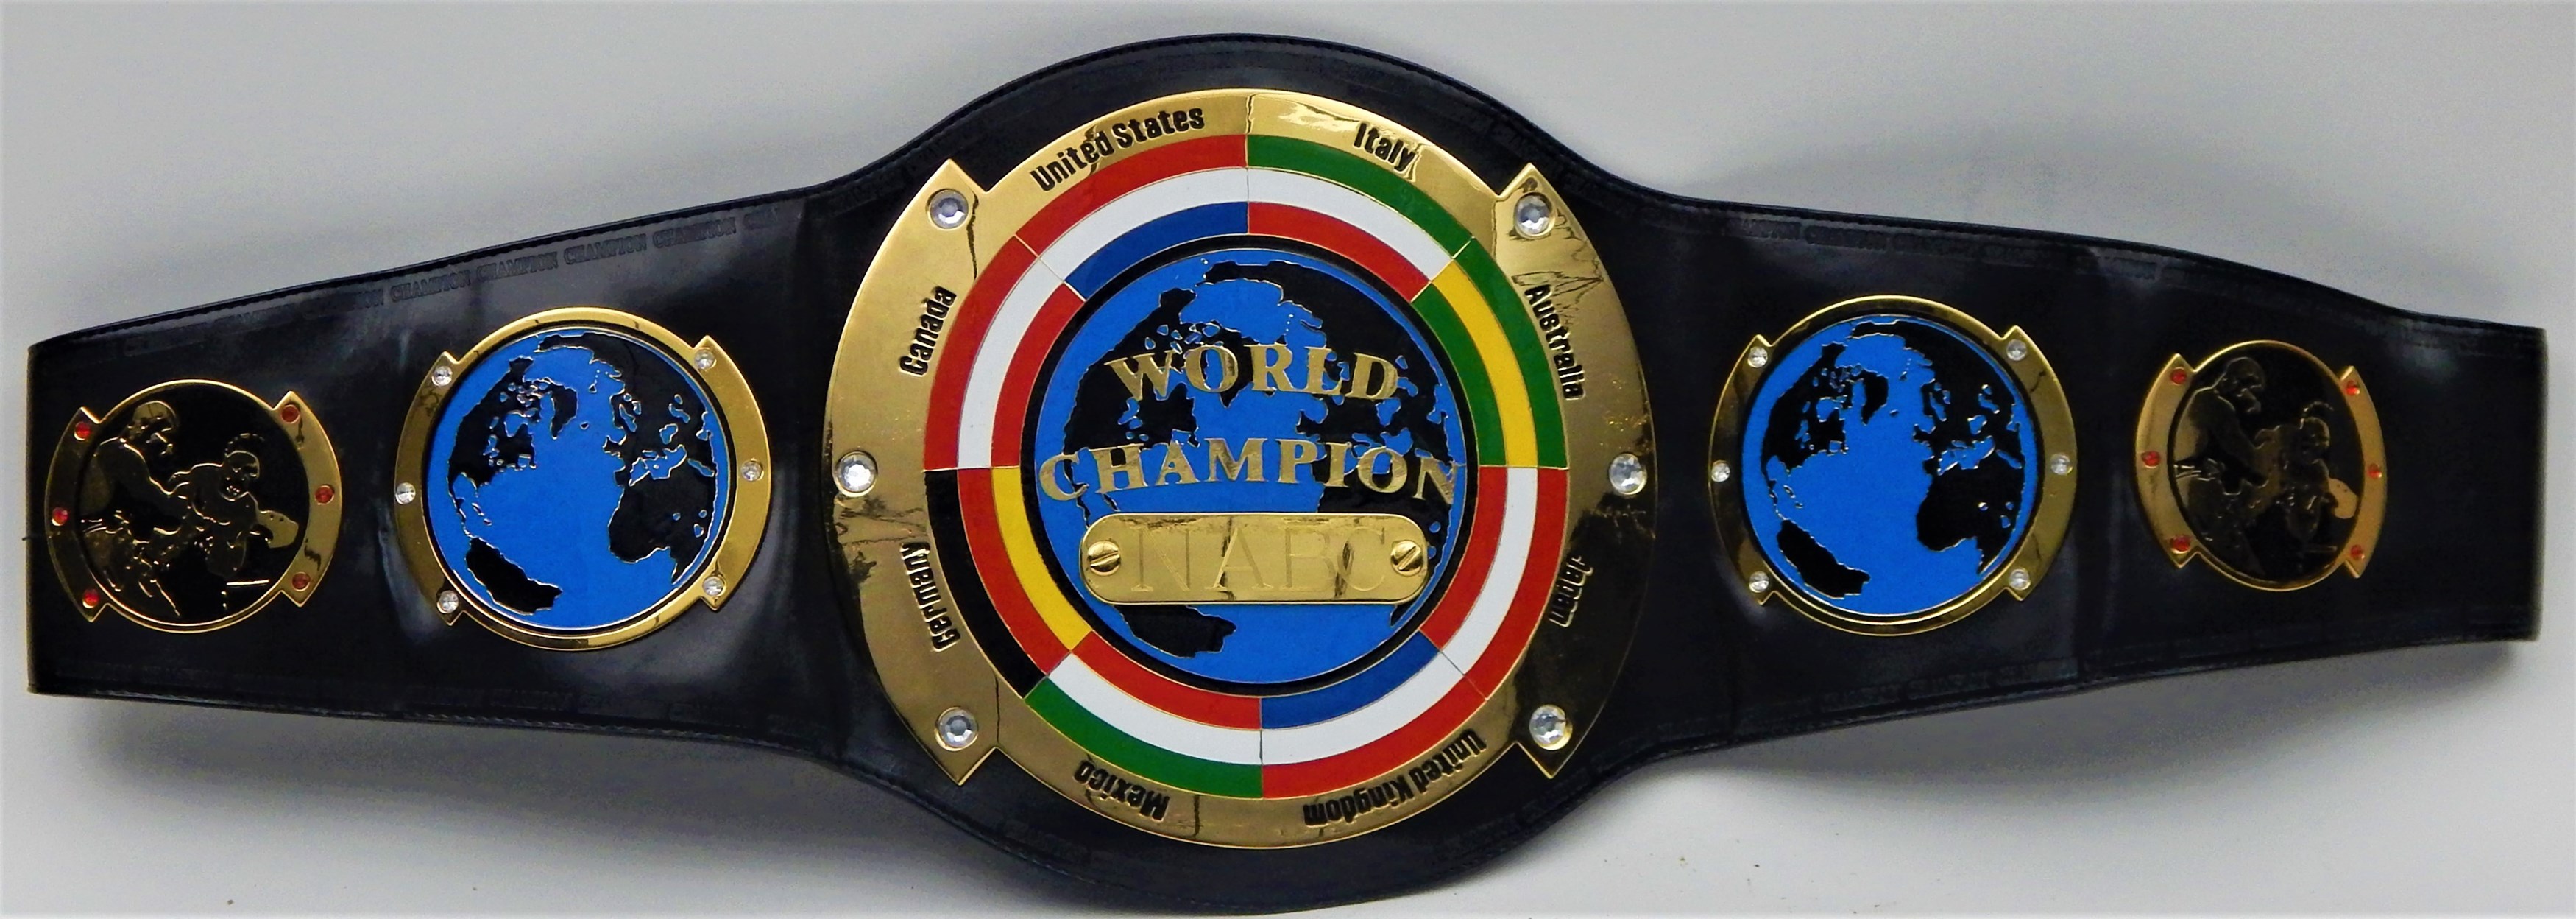 Memorabilia Boxing - NABC World Championship Belt